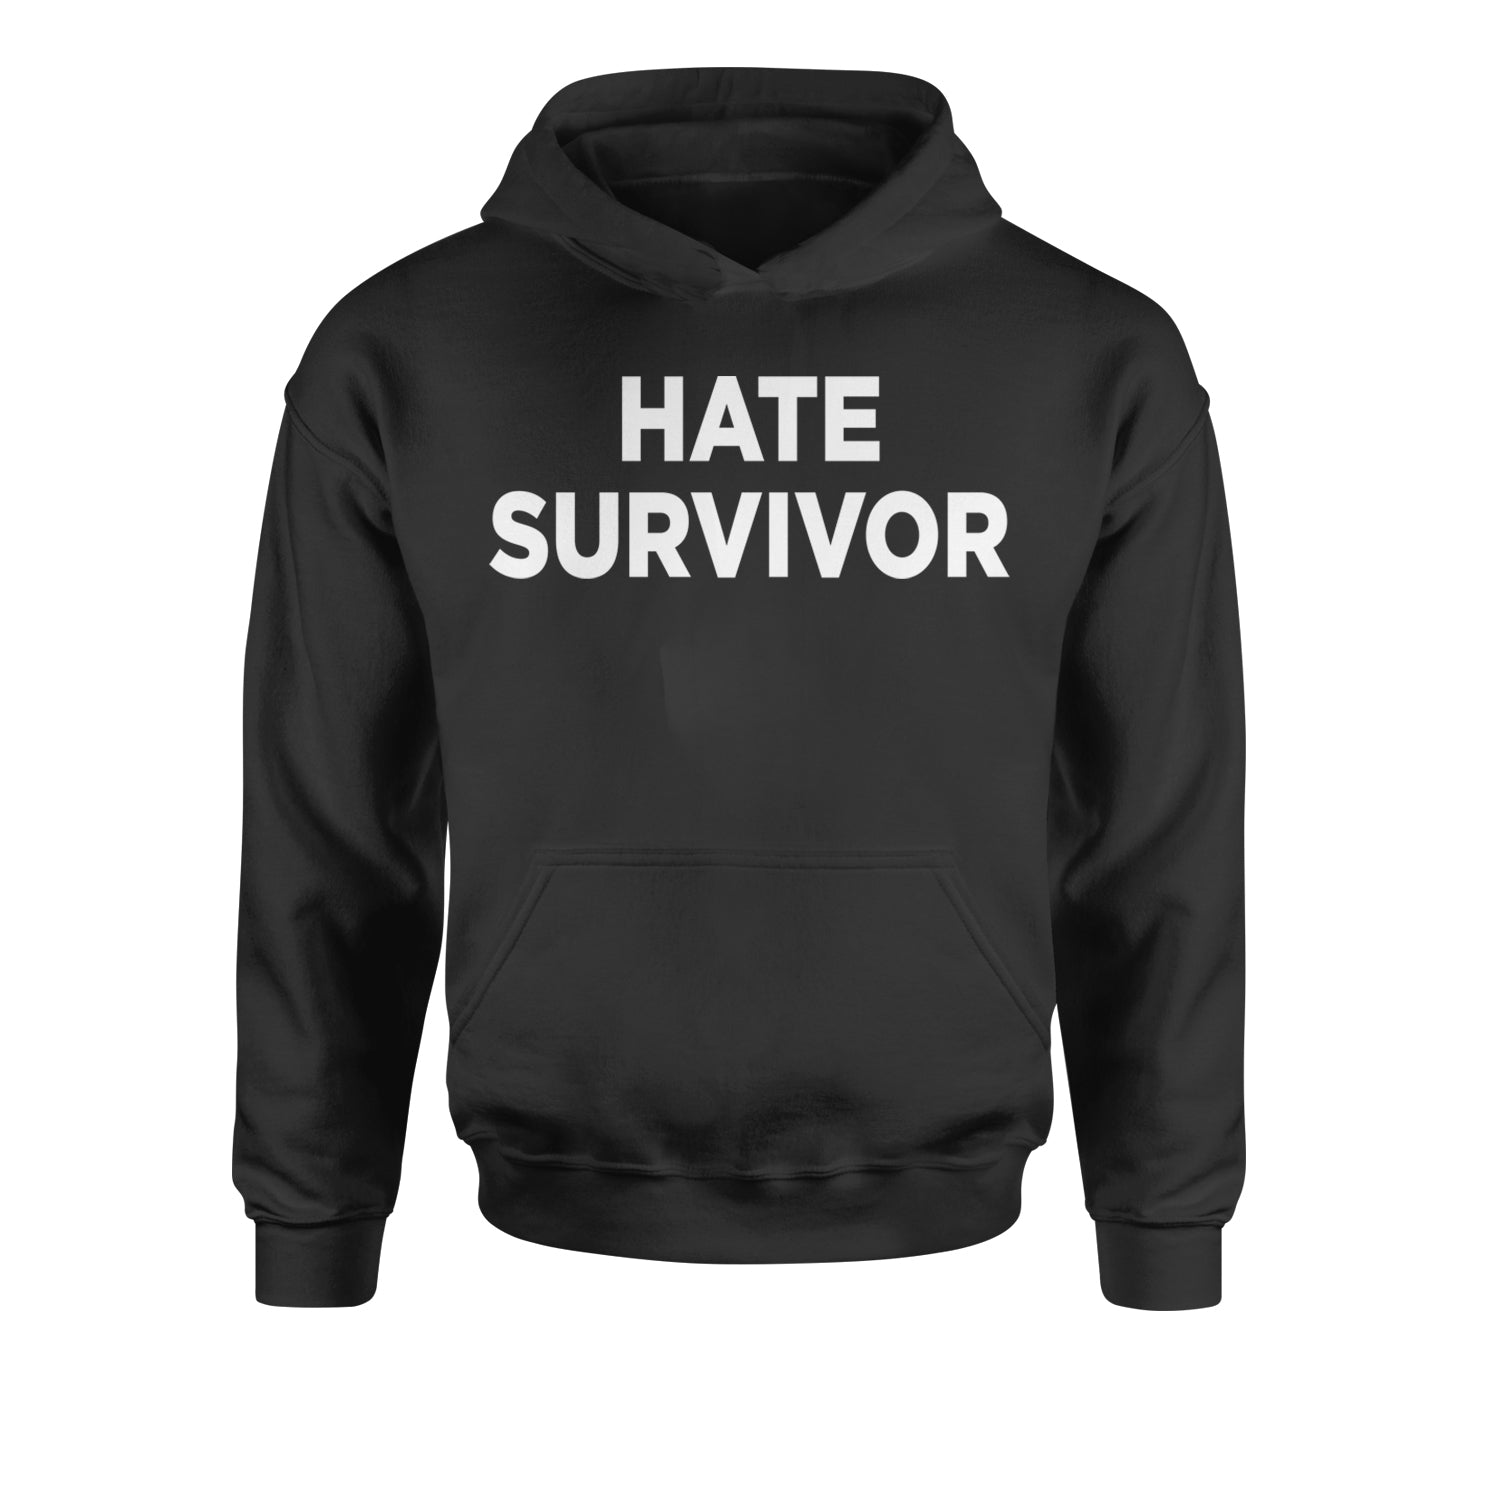 Hate Survivor Rap Beef Youth-Sized Hoodie